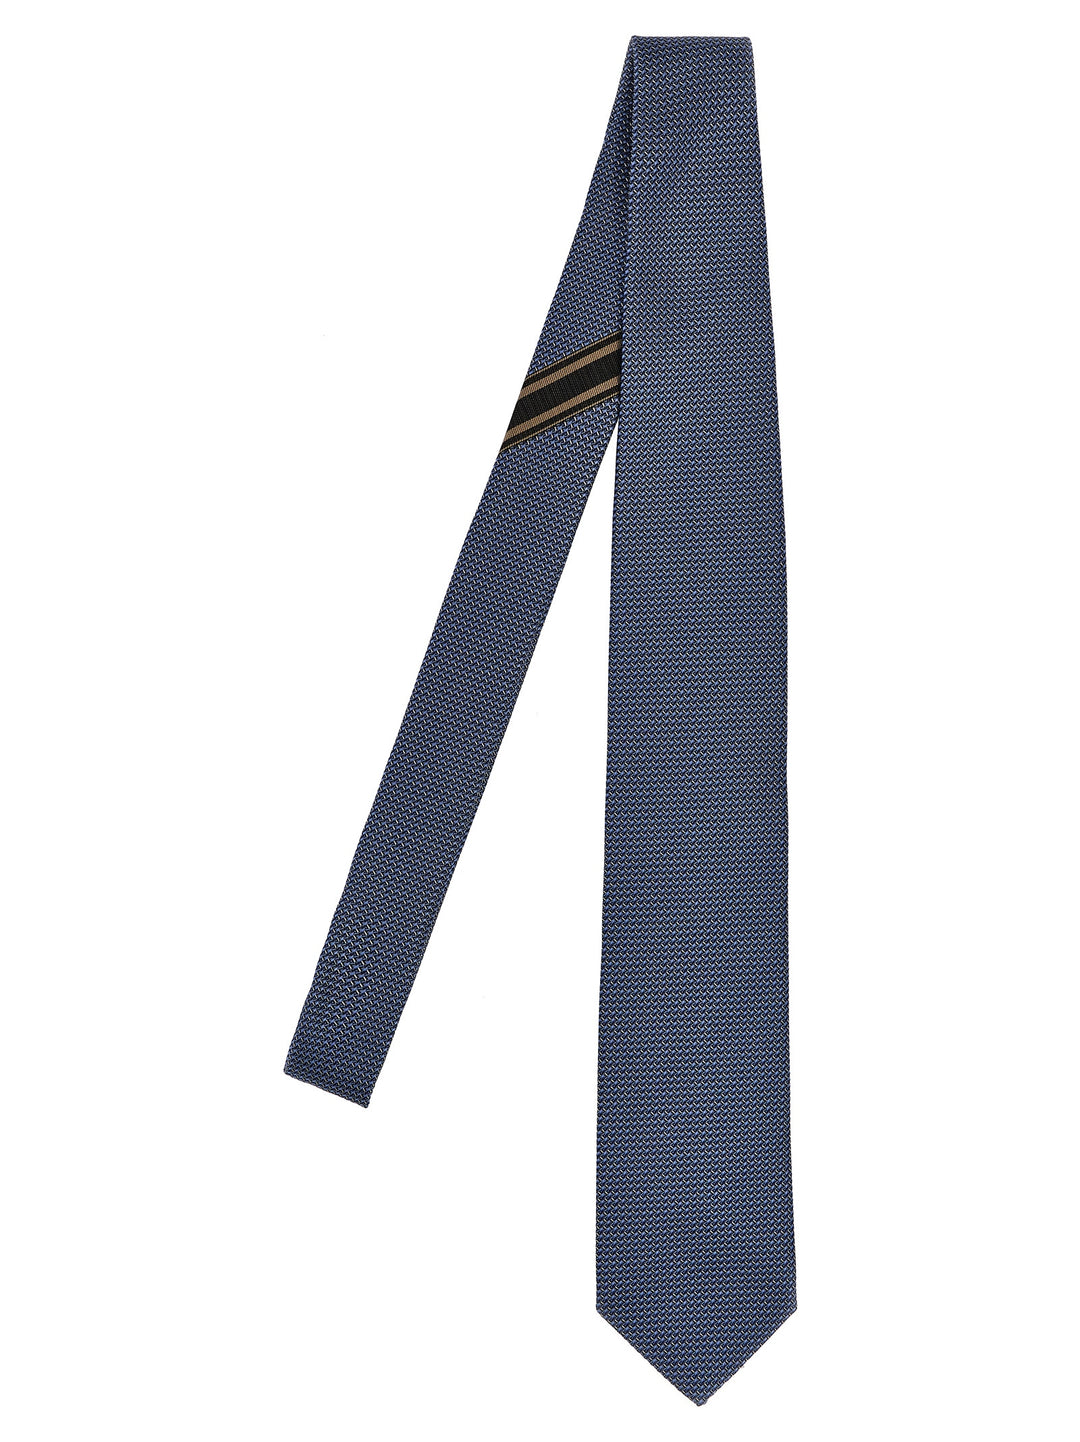 Micro Operated Patterned Tie Cravatte Celeste